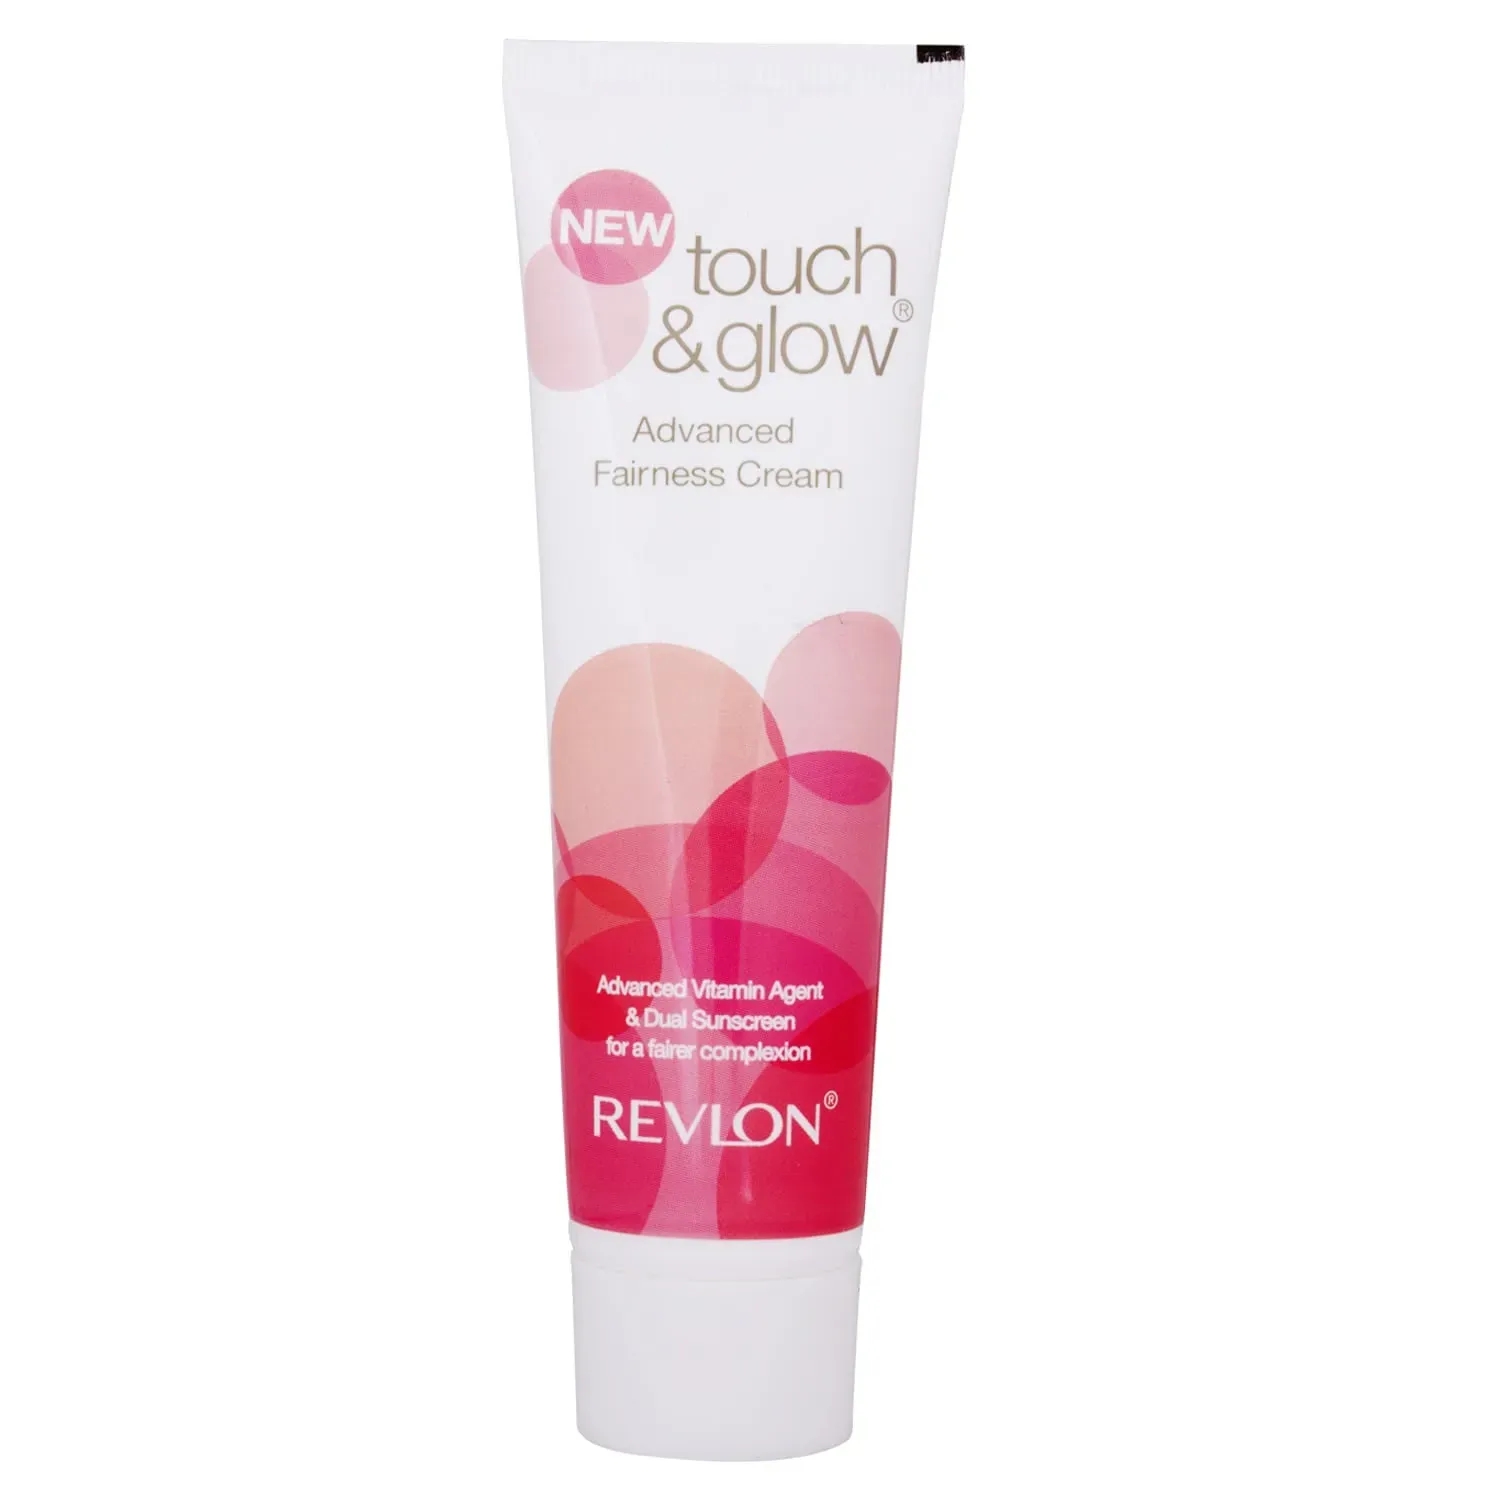 Revlon | Revlon Touch & Glow Advanced Fairness Cream (75g)